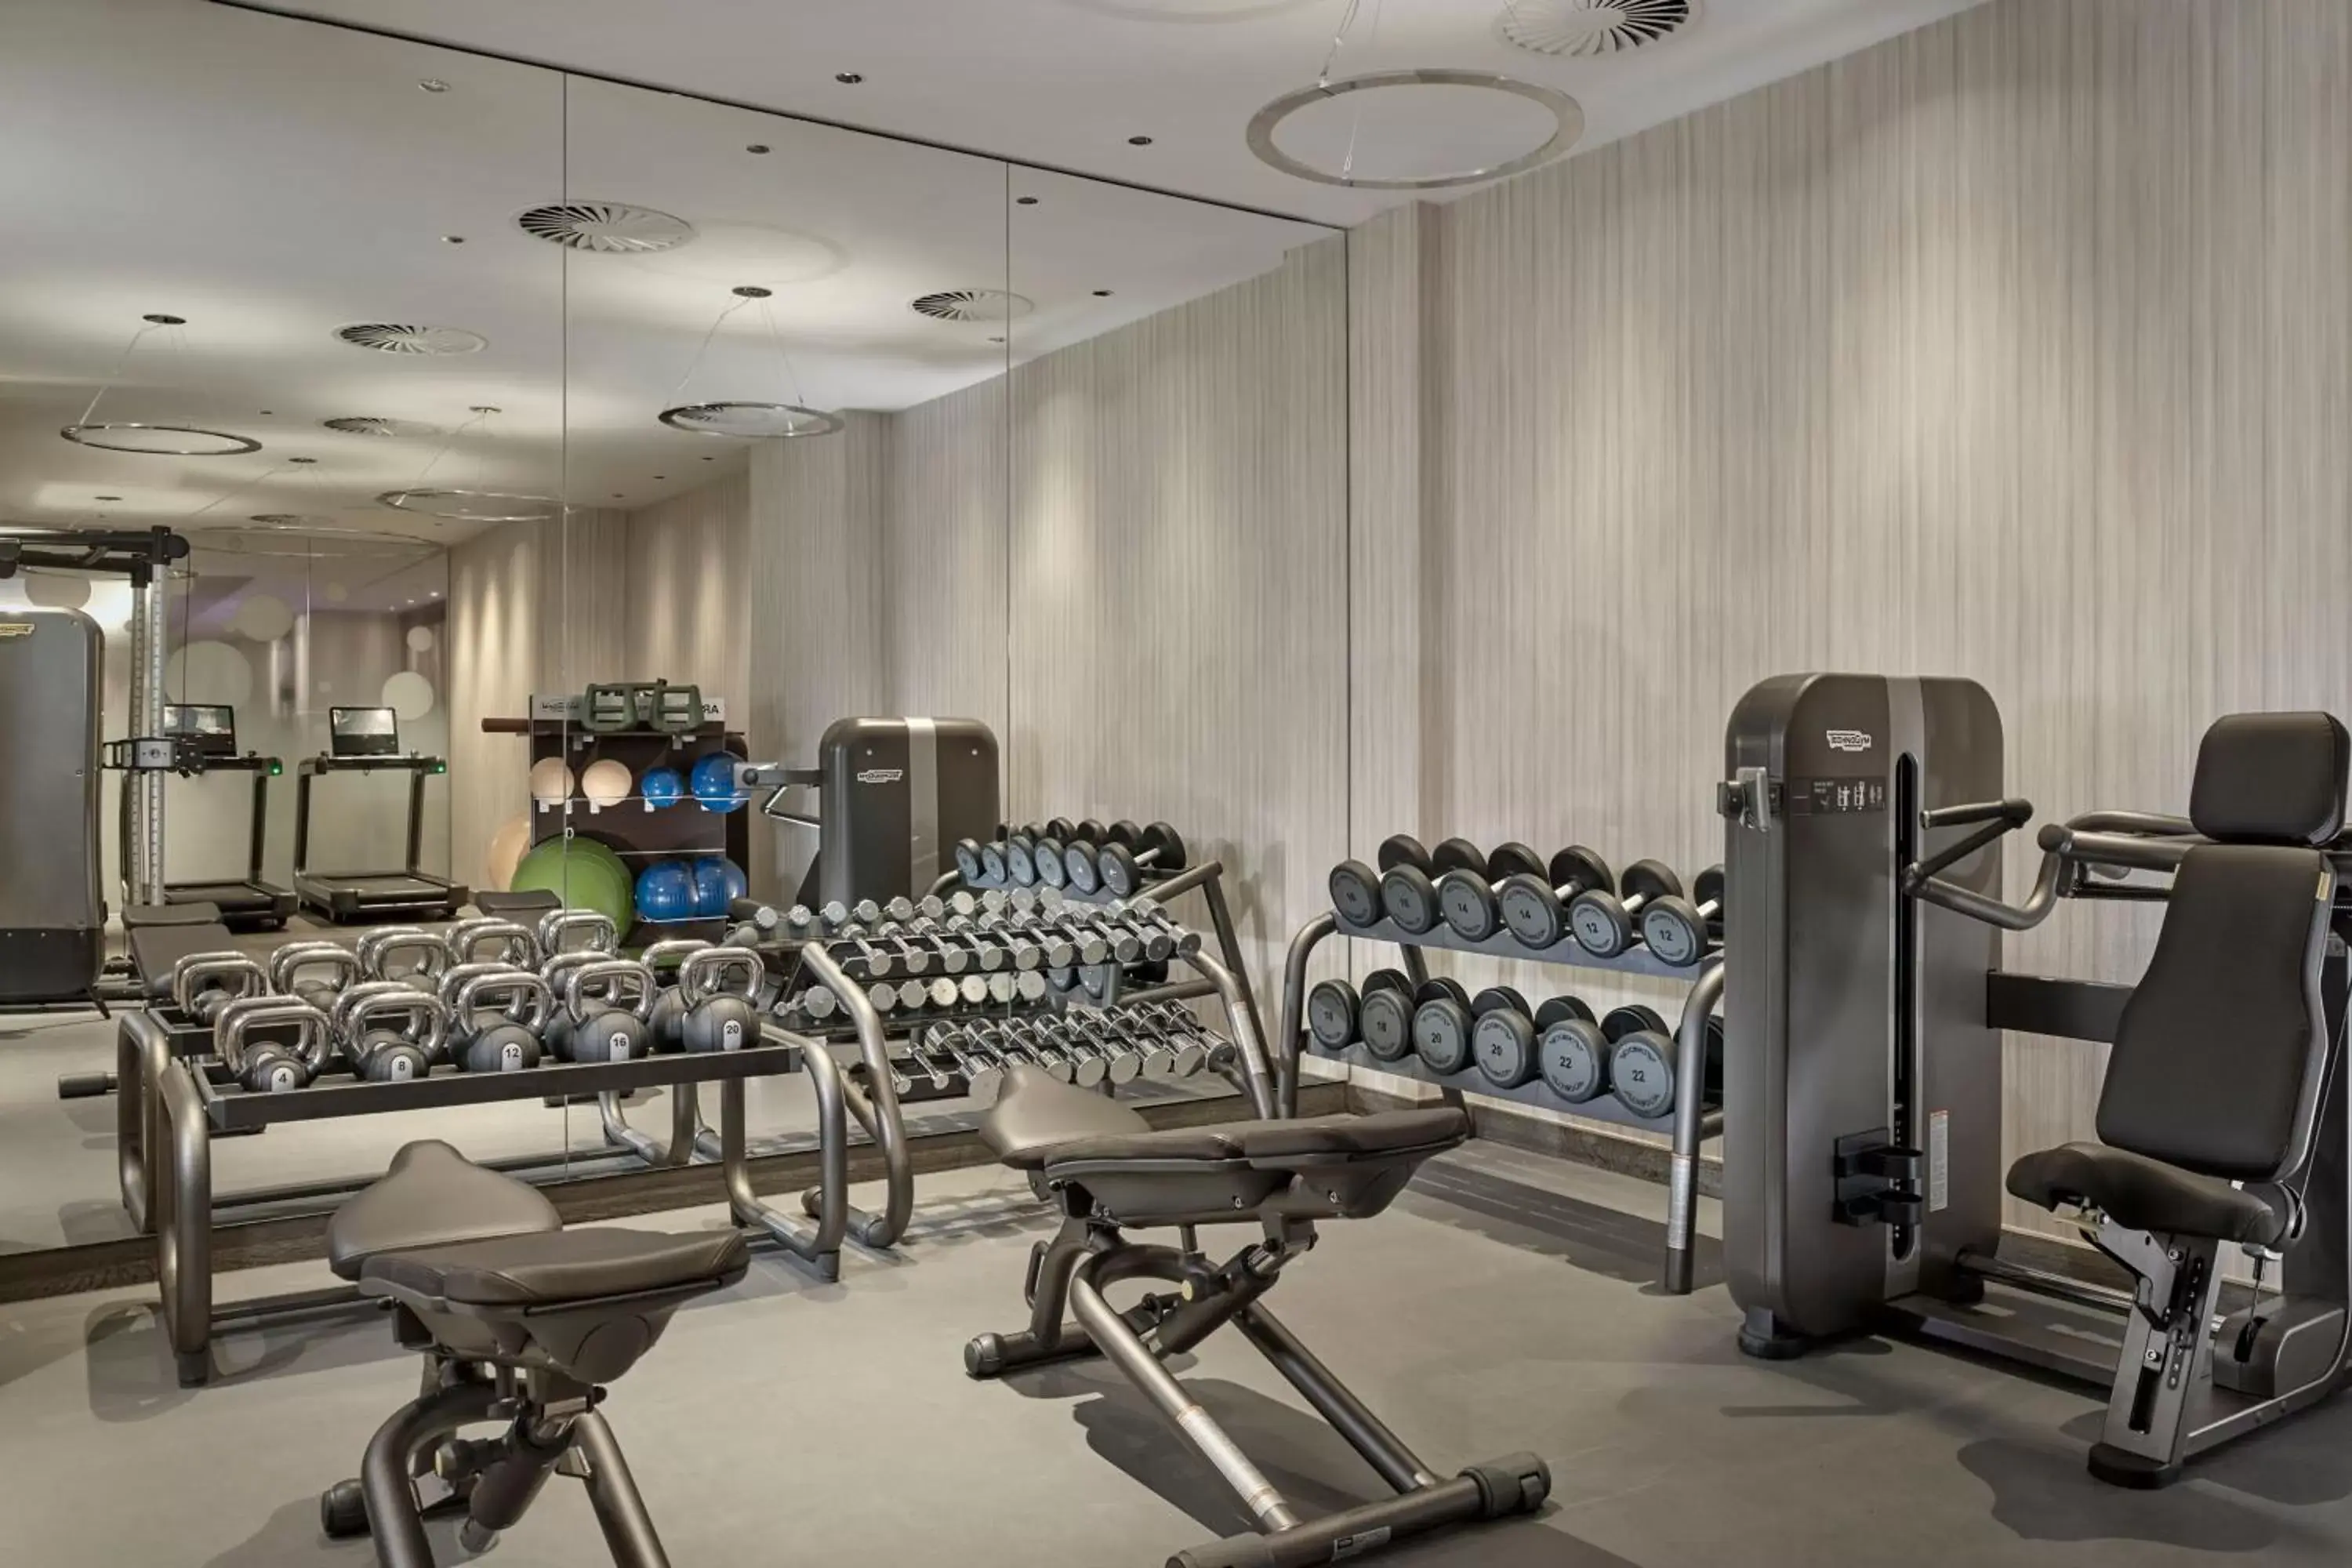 Fitness centre/facilities, Fitness Center/Facilities in The Ritz-Carlton, Berlin